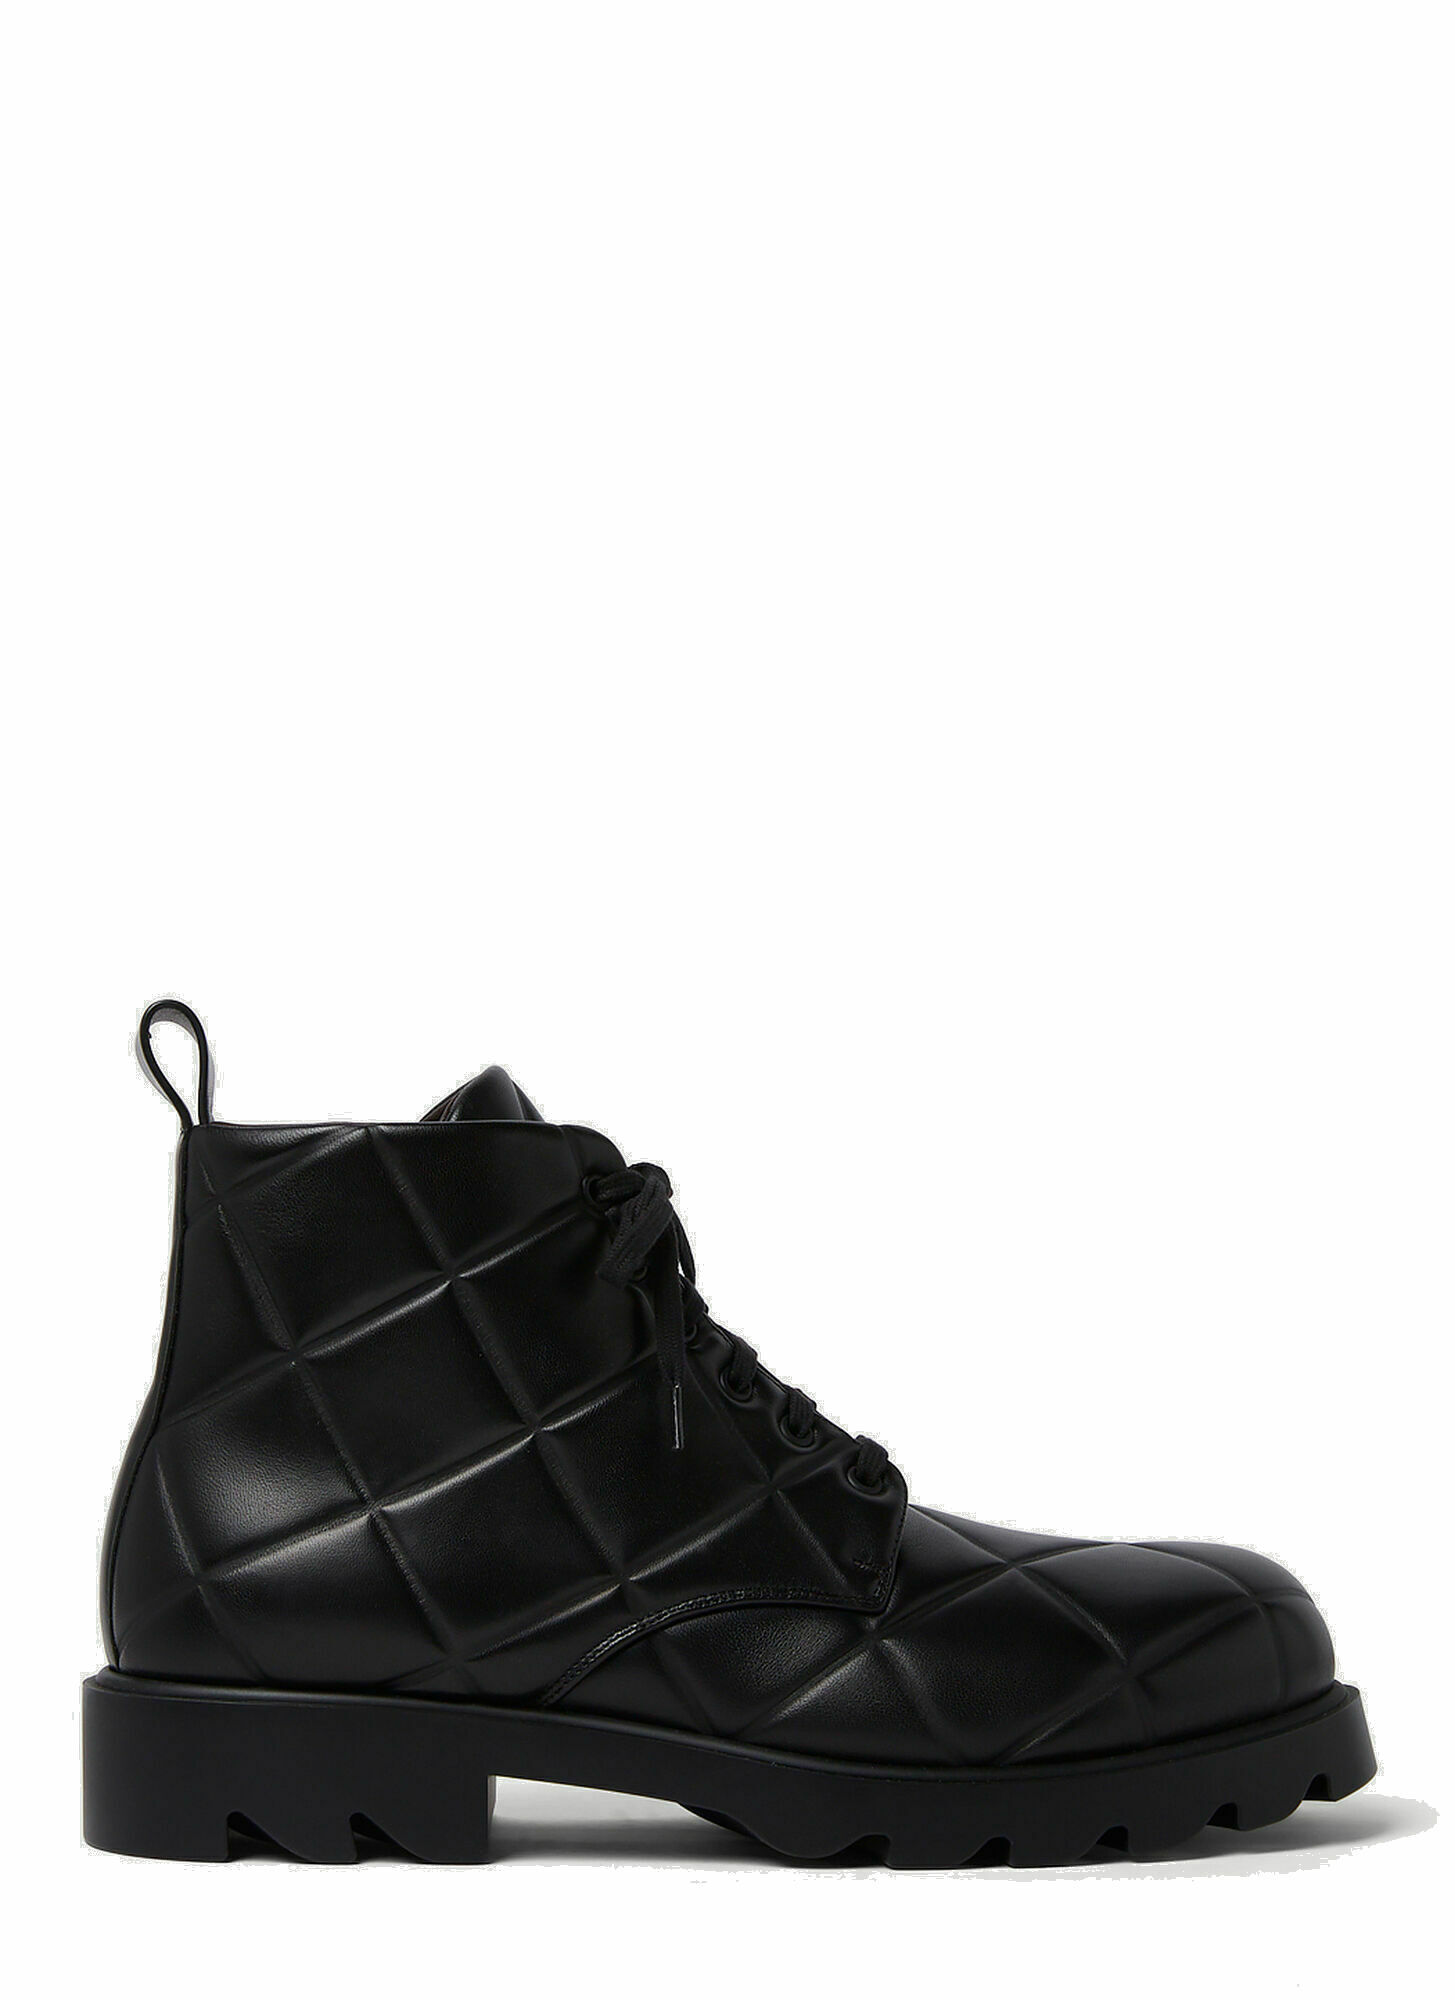 Photo: Strut Grid Boots in Black